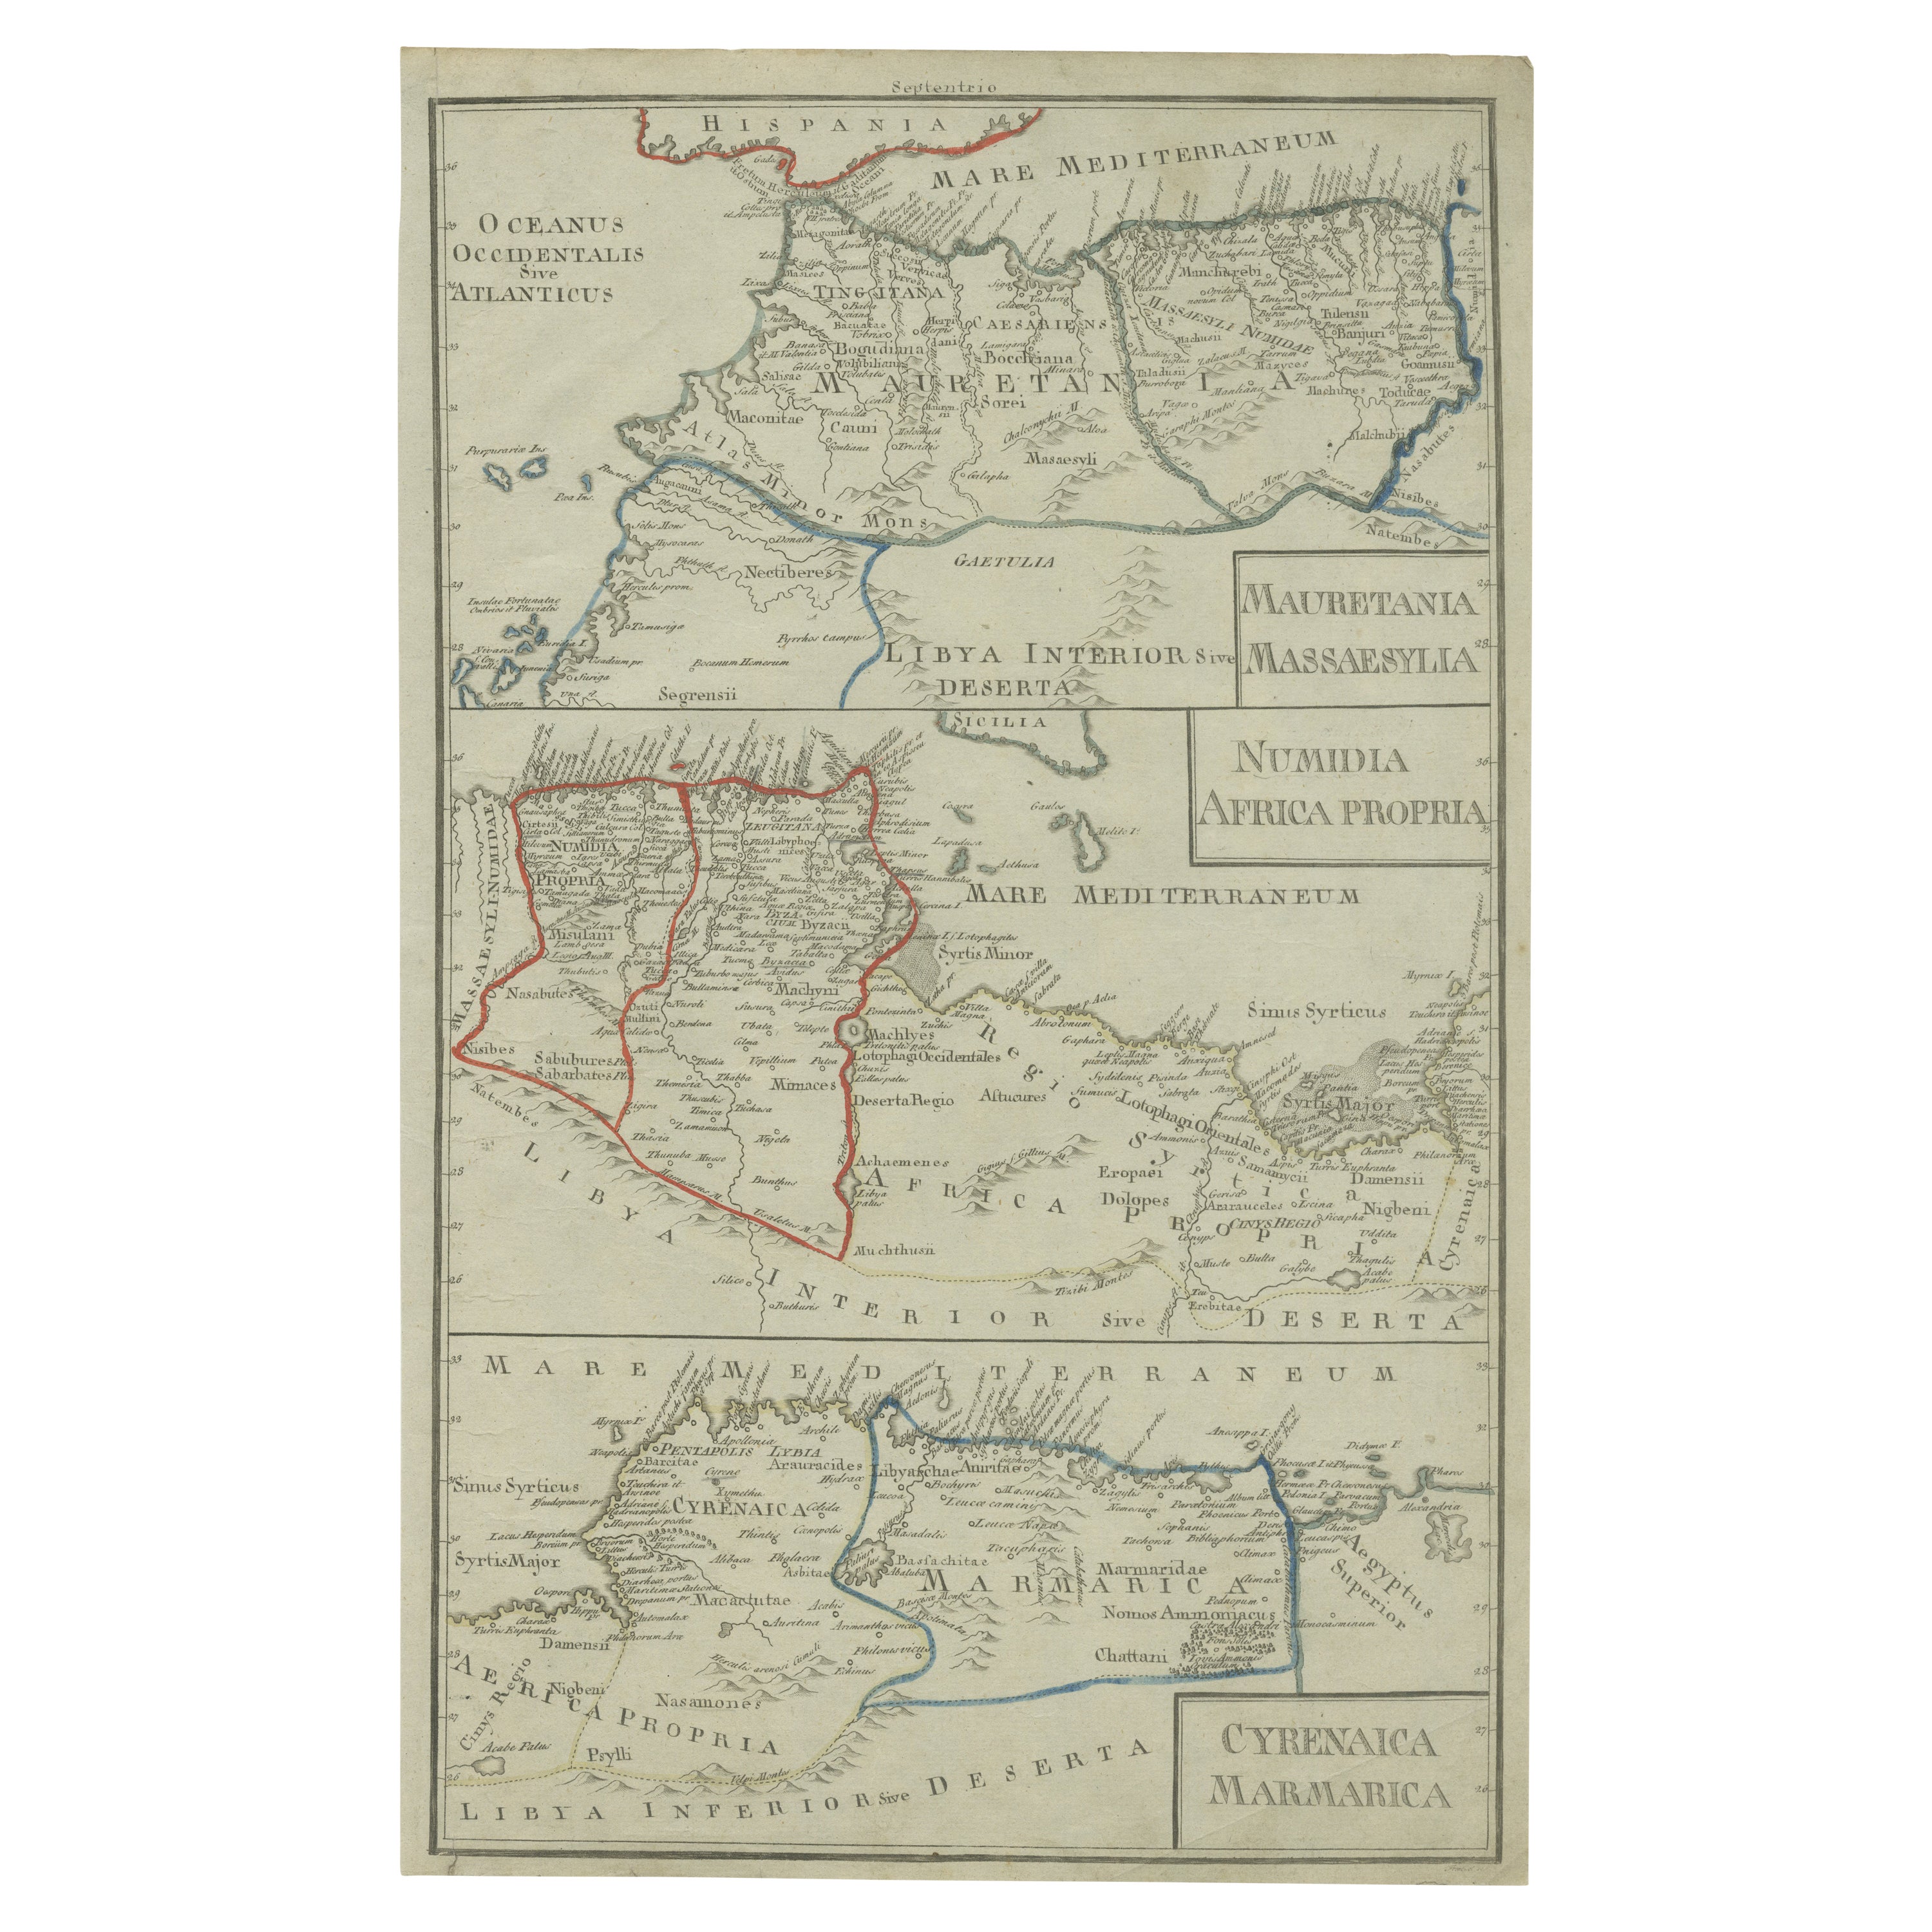 Carte ancienne de Mauritania, Massaesylia, Numidia, Tunisie, Cyrenaica et Marmarica